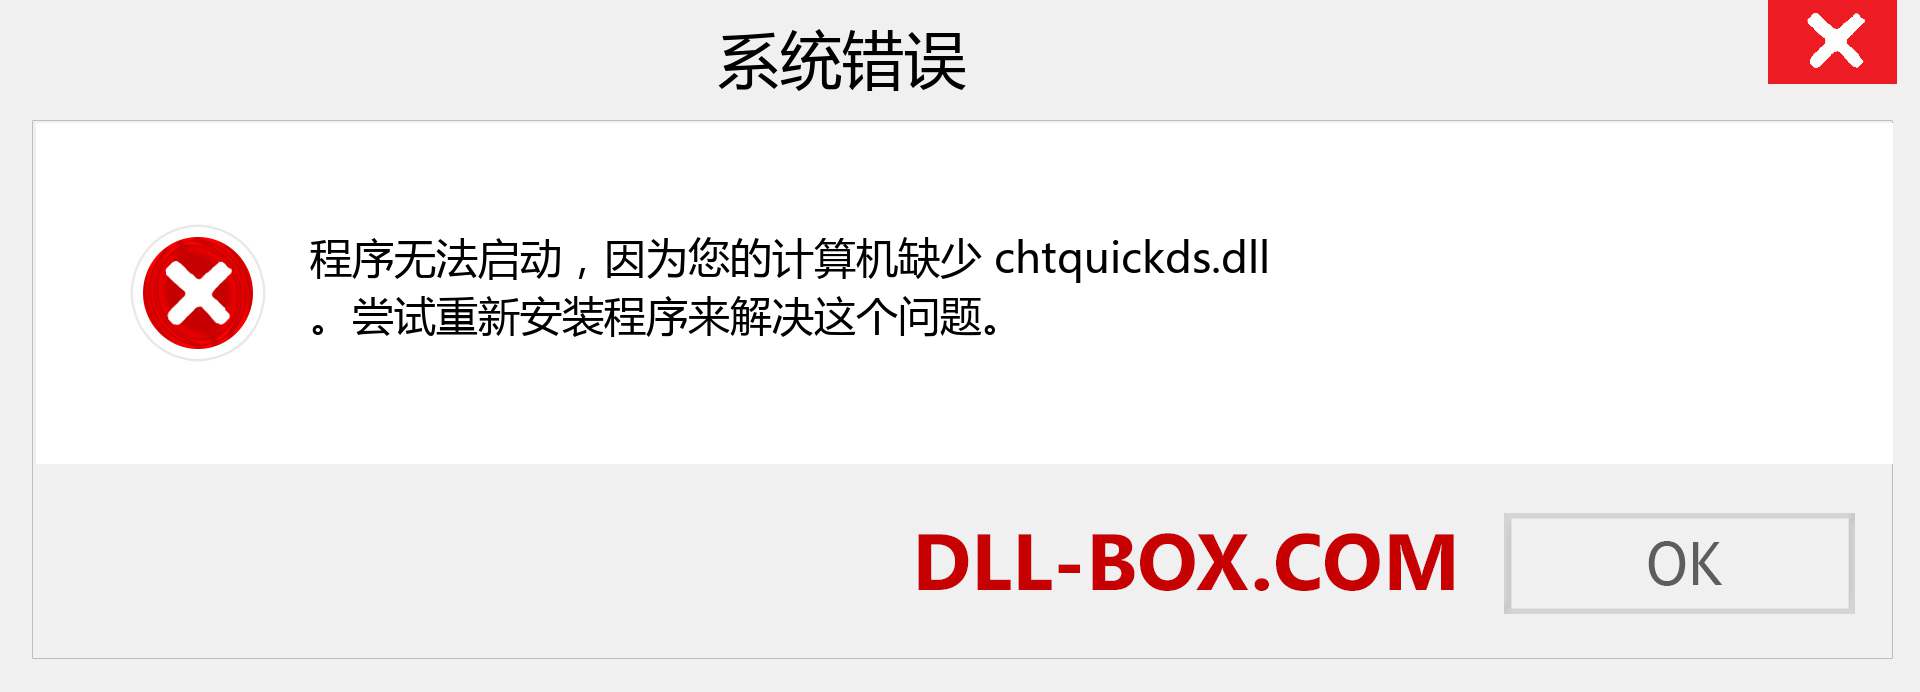 chtquickds.dll 文件丢失？。 适用于 Windows 7、8、10 的下载 - 修复 Windows、照片、图像上的 chtquickds dll 丢失错误